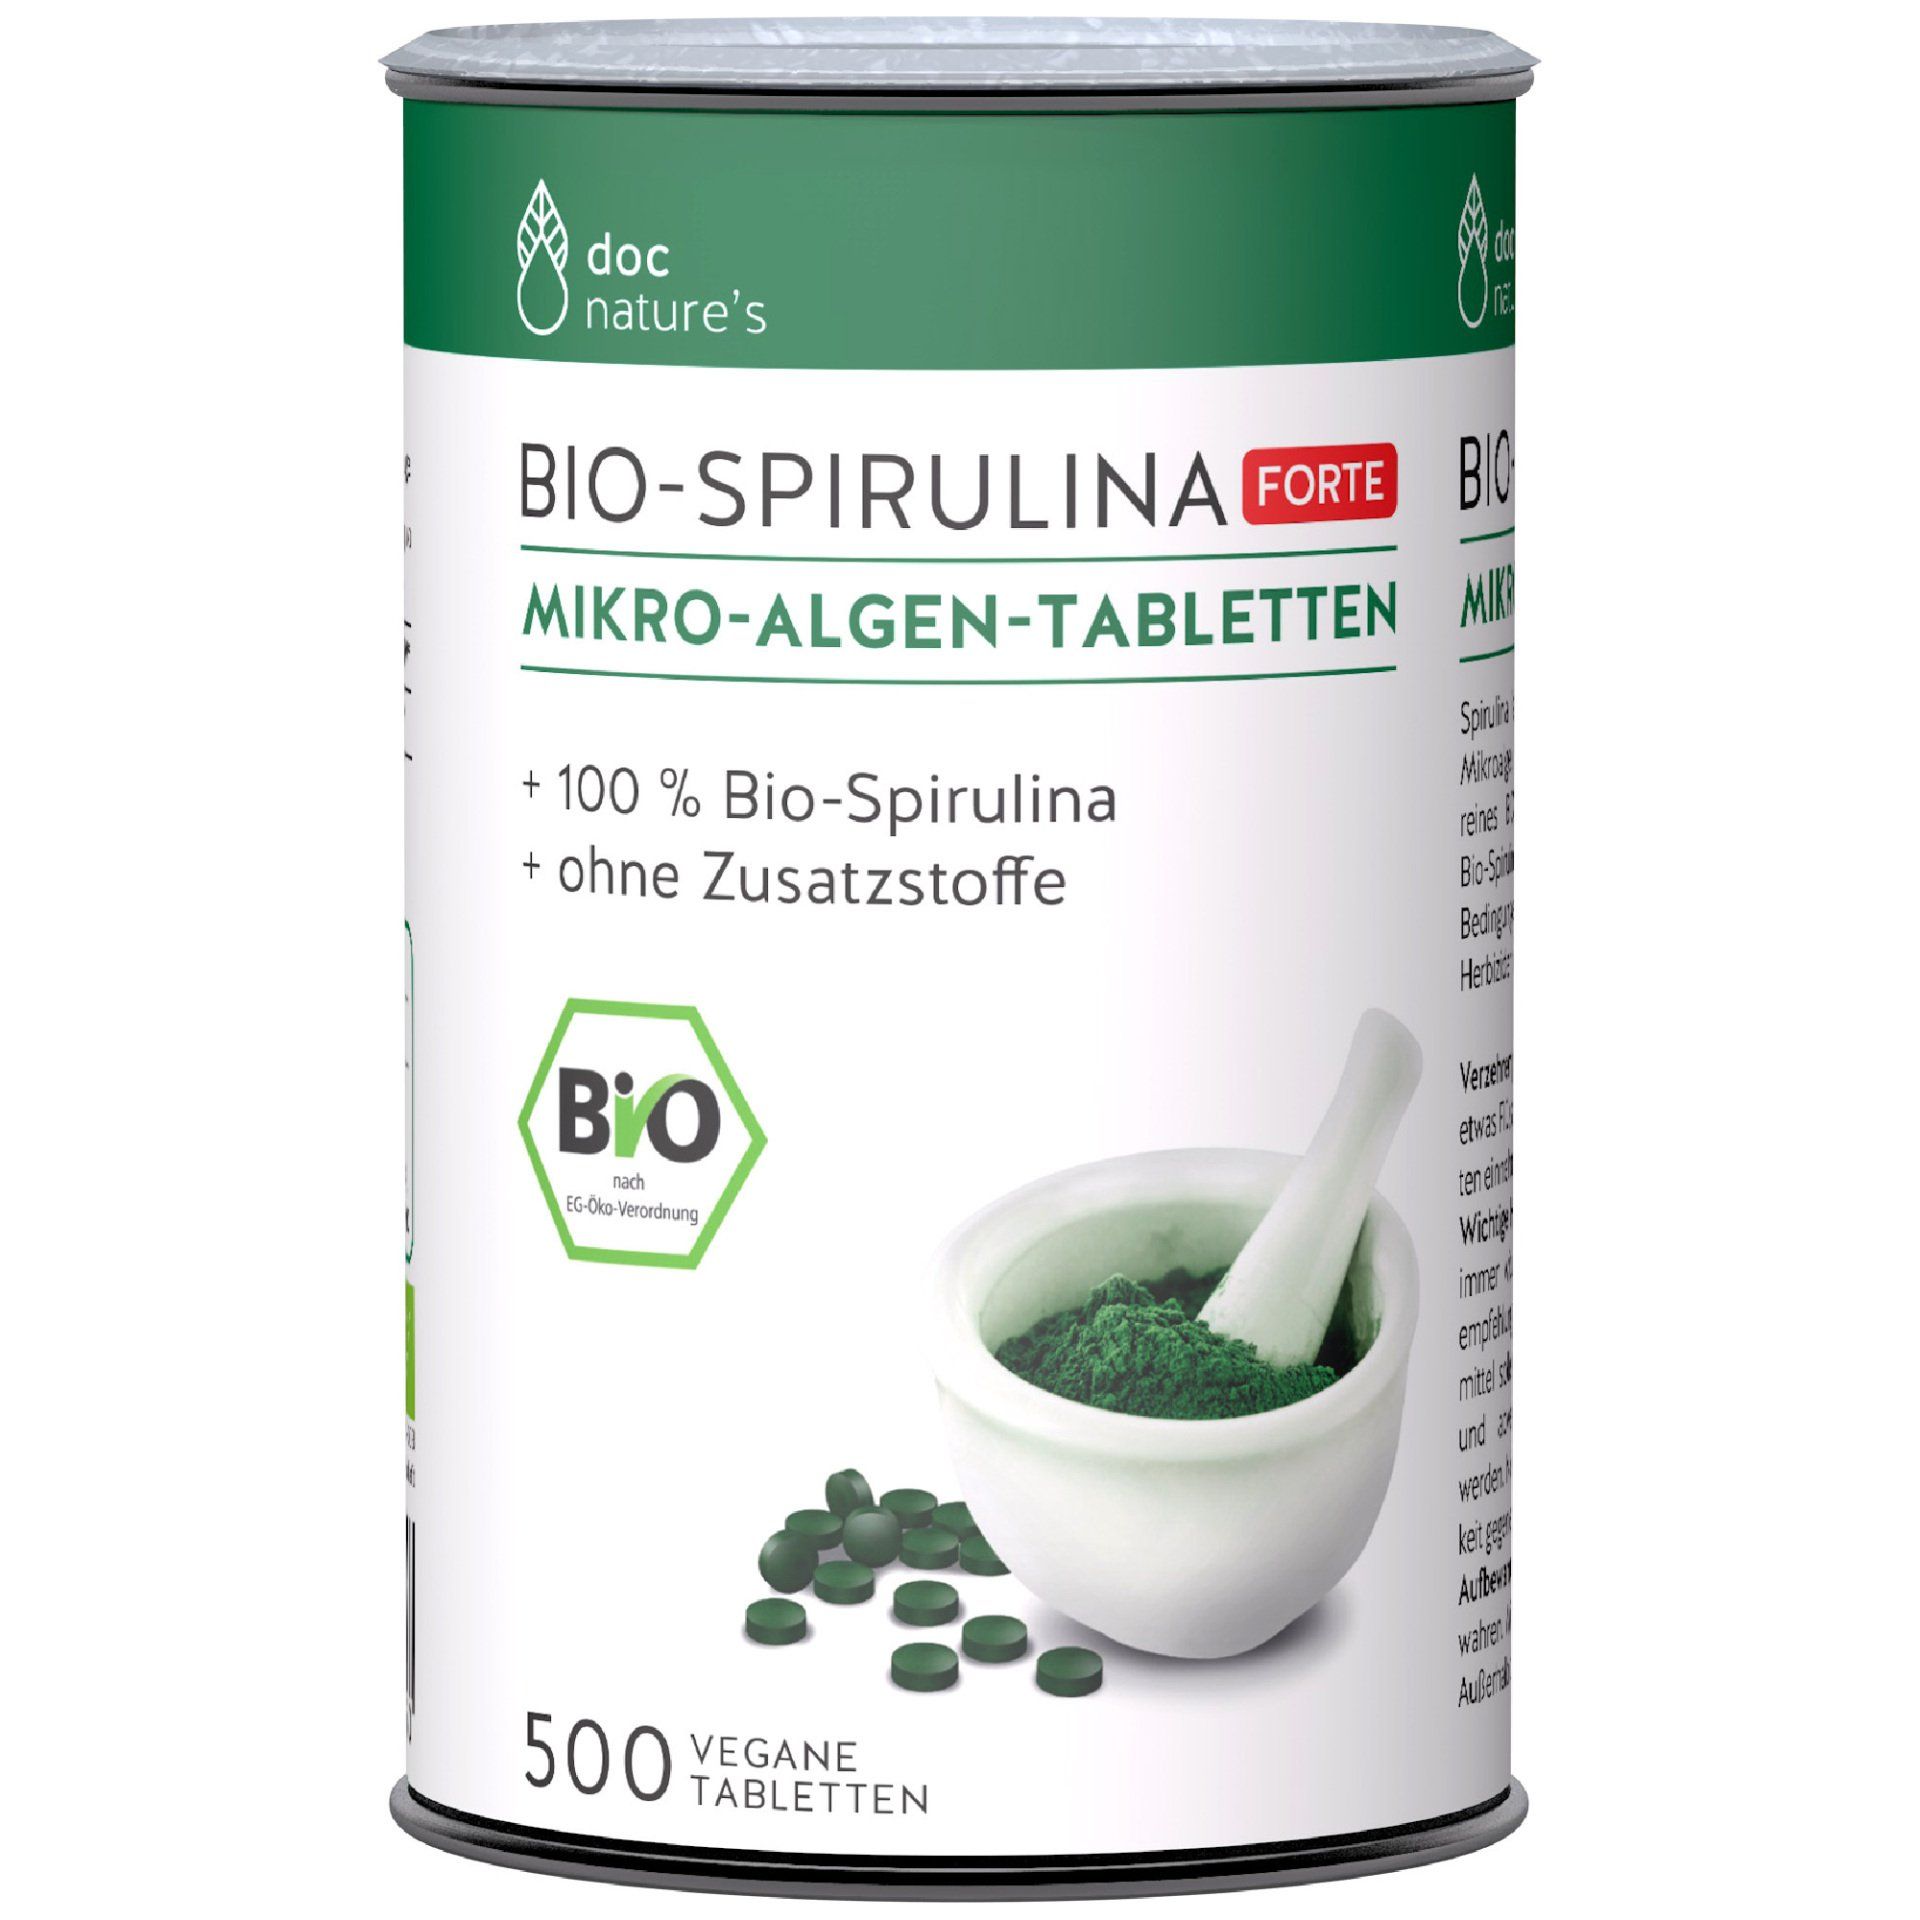 doc natures bio spirulina forte mikro algen tabletten